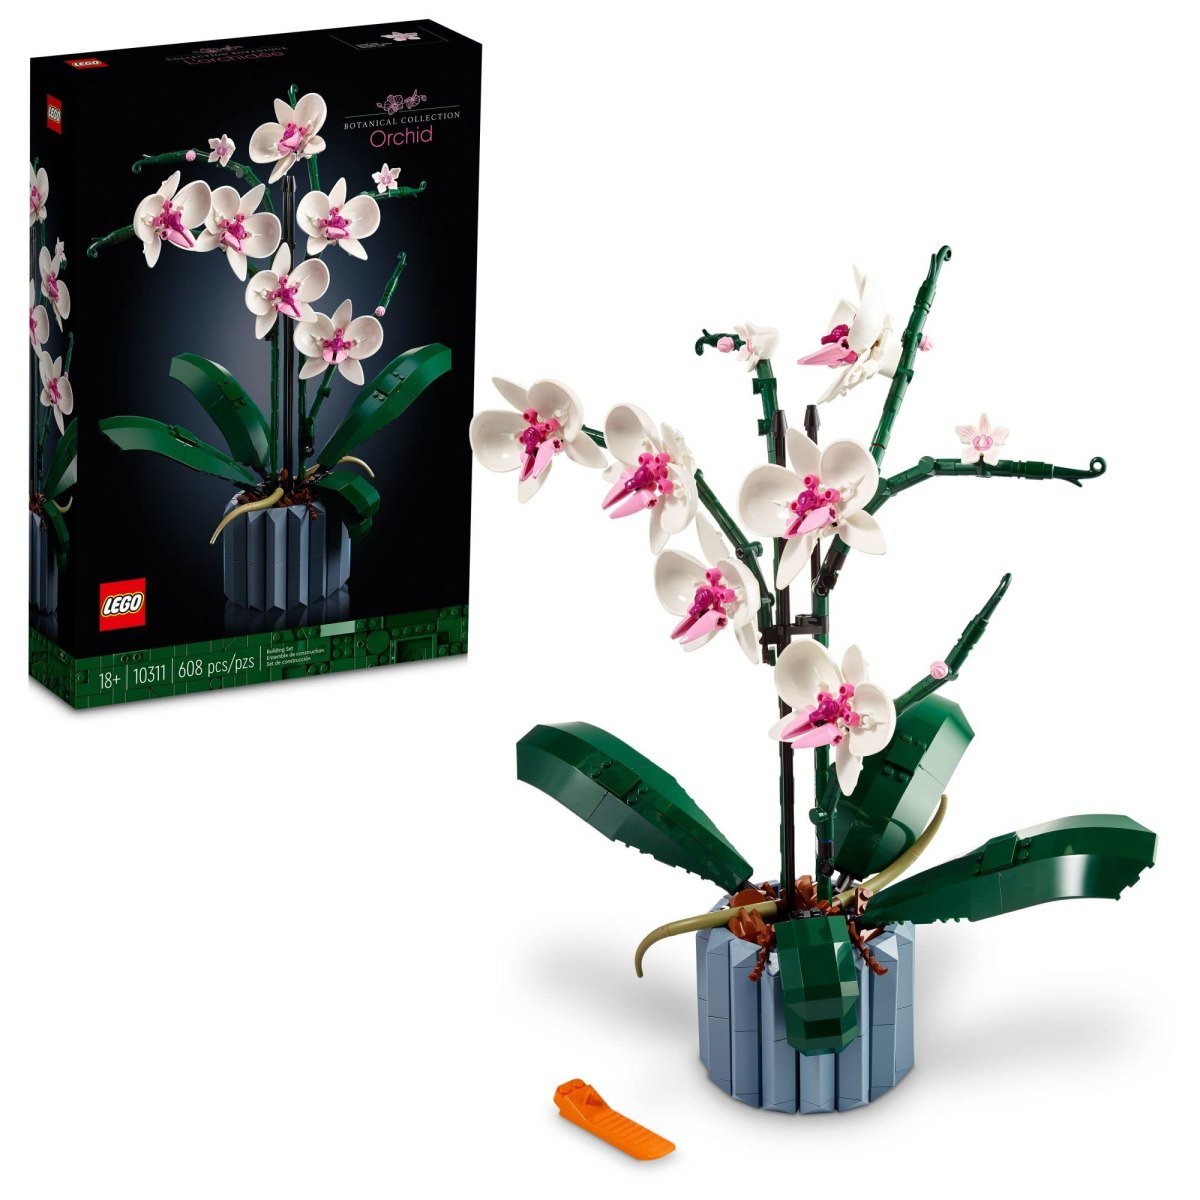 LEGO Orchid set